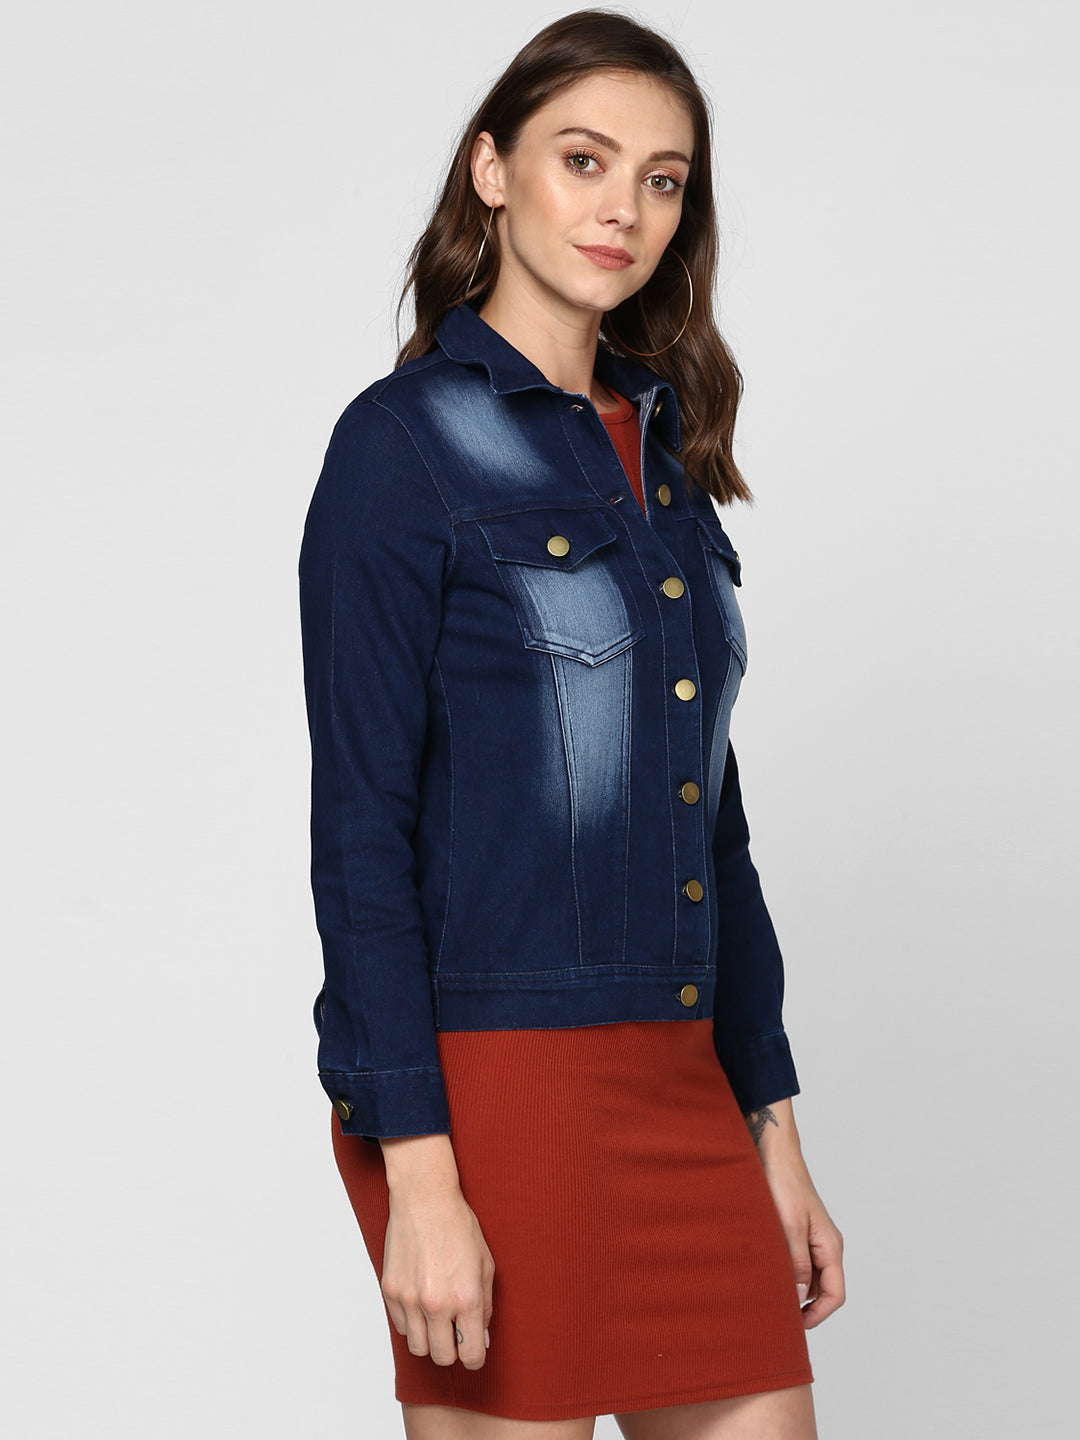 Women's Navy Blue Washed Denim Jacket